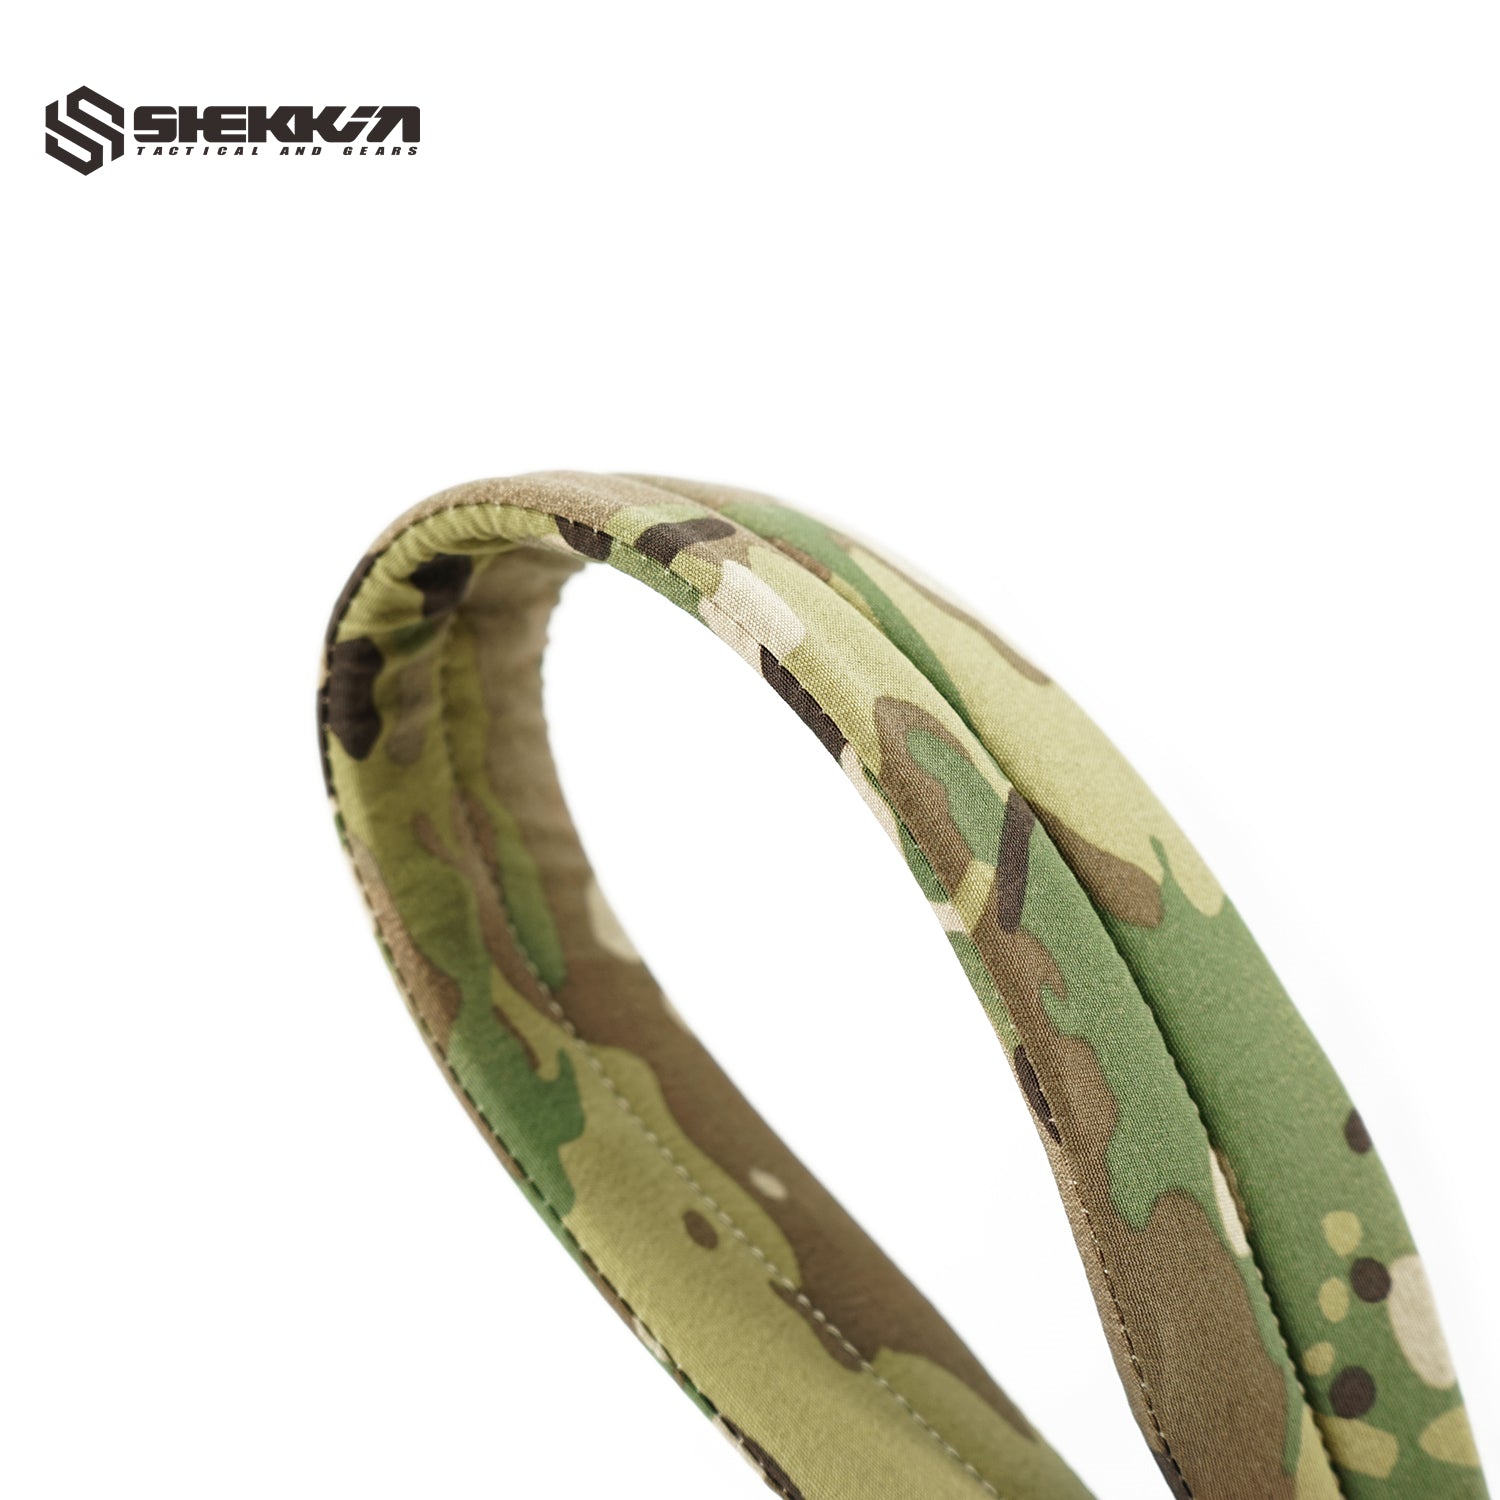 SBS style two point tactical sling - Shekkin Gears